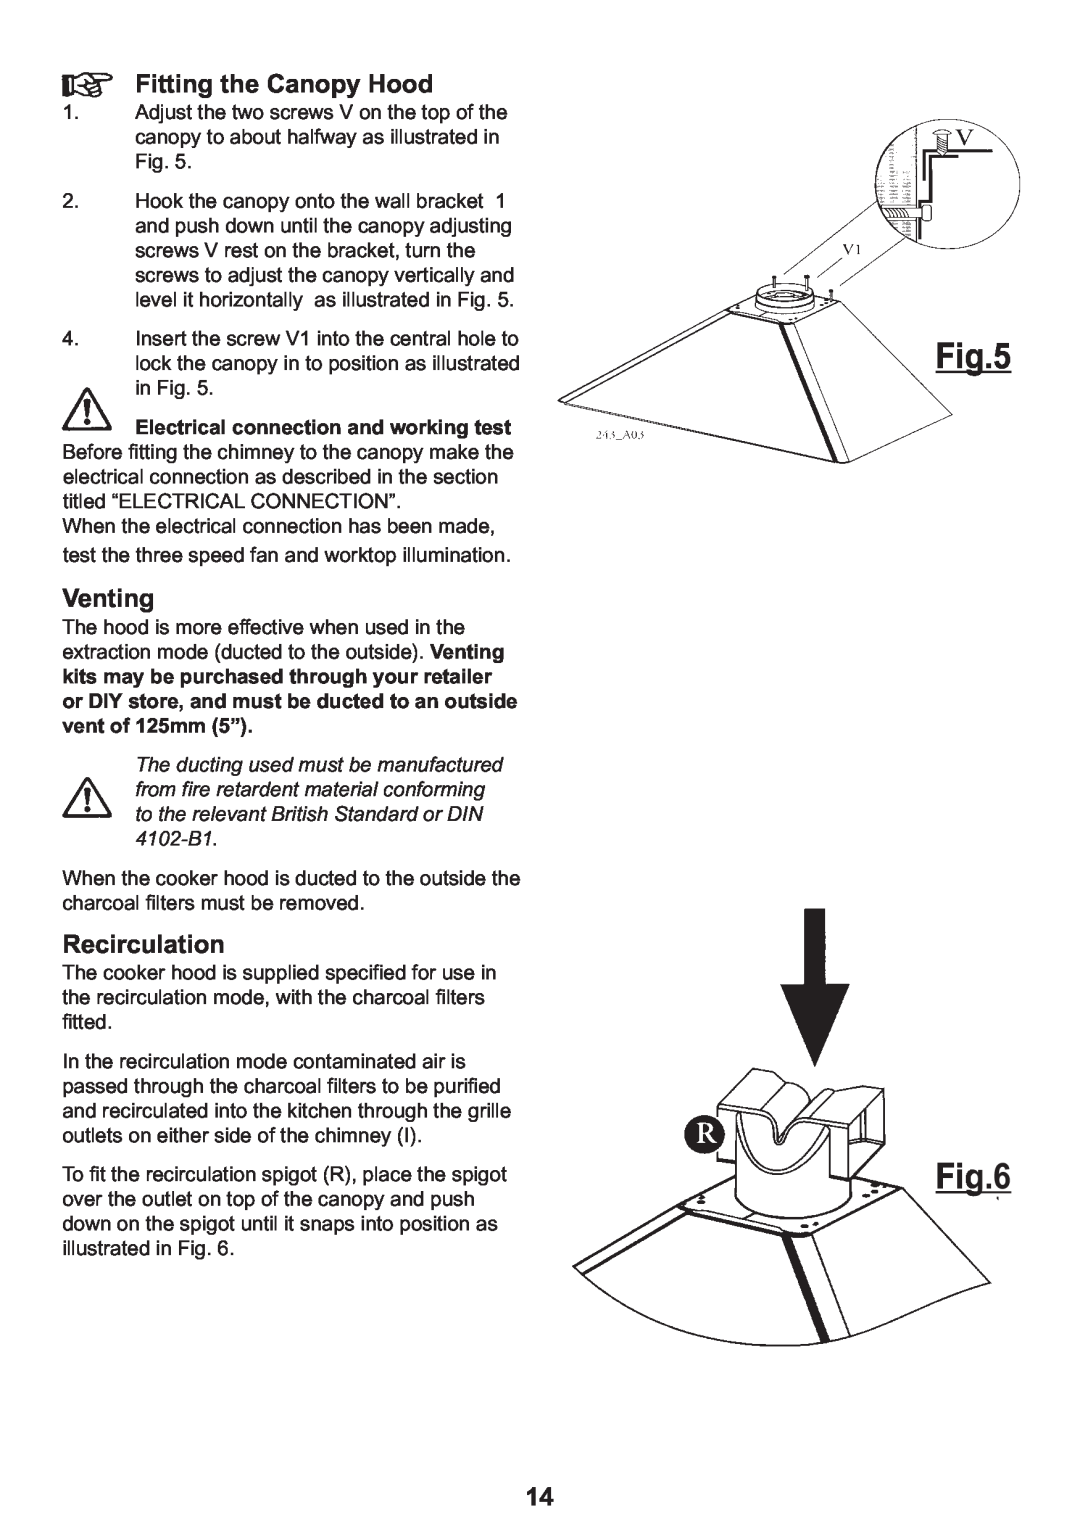 Zanussi CH90, CH60 manual Fitting the Canopy Hood, Venting, Recirculation 